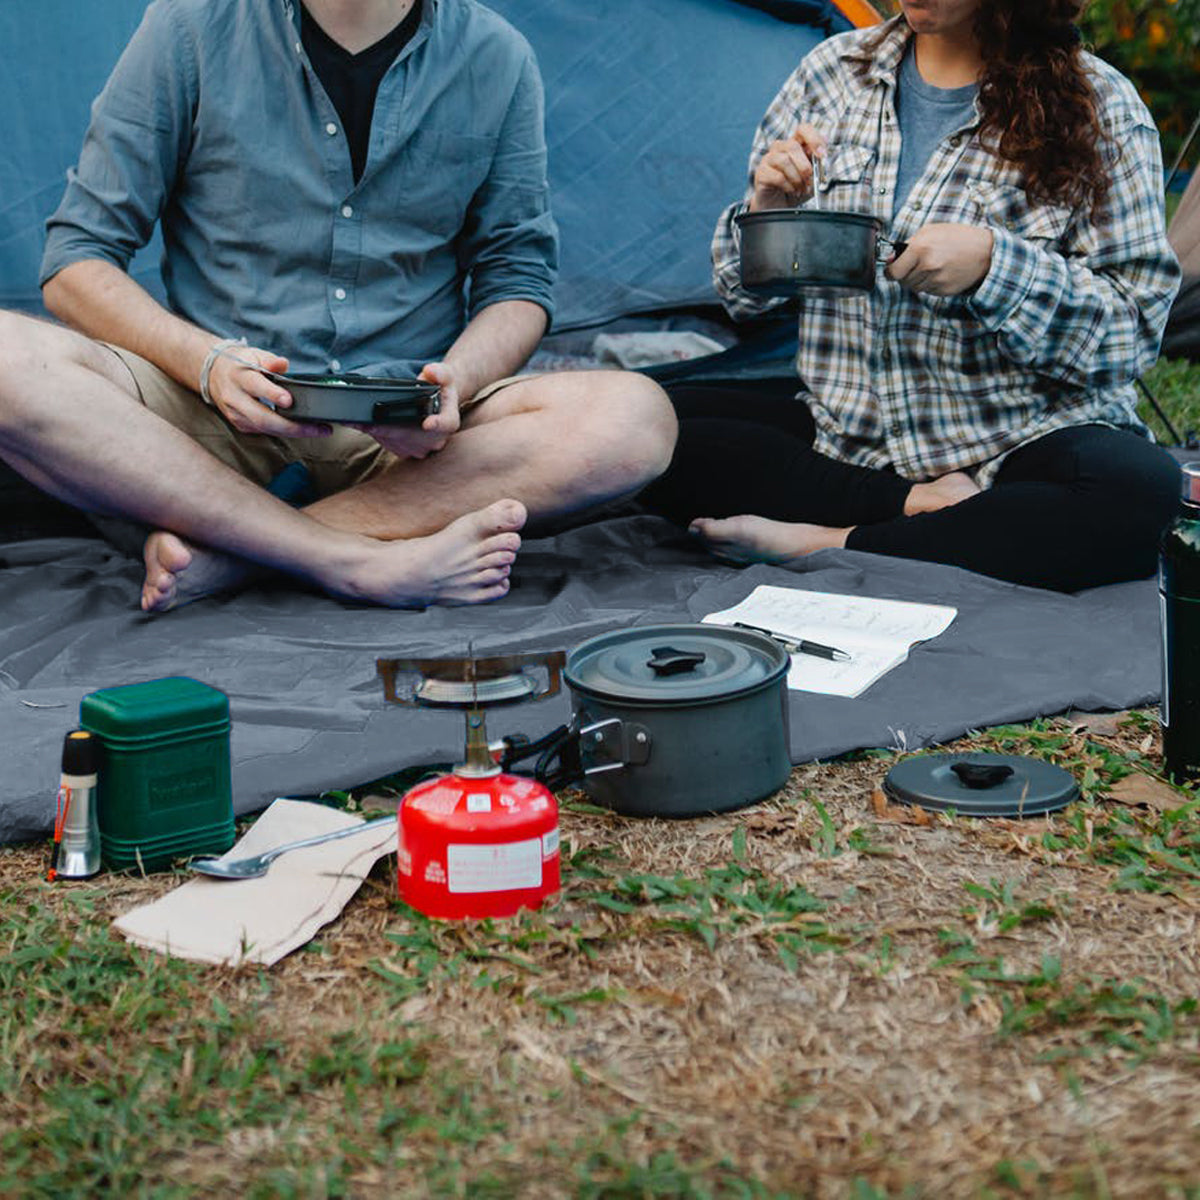 Waterproof  Tent Ultralight Camping Mat Tarp with Drawstring Storage Bag - FreeSoldier